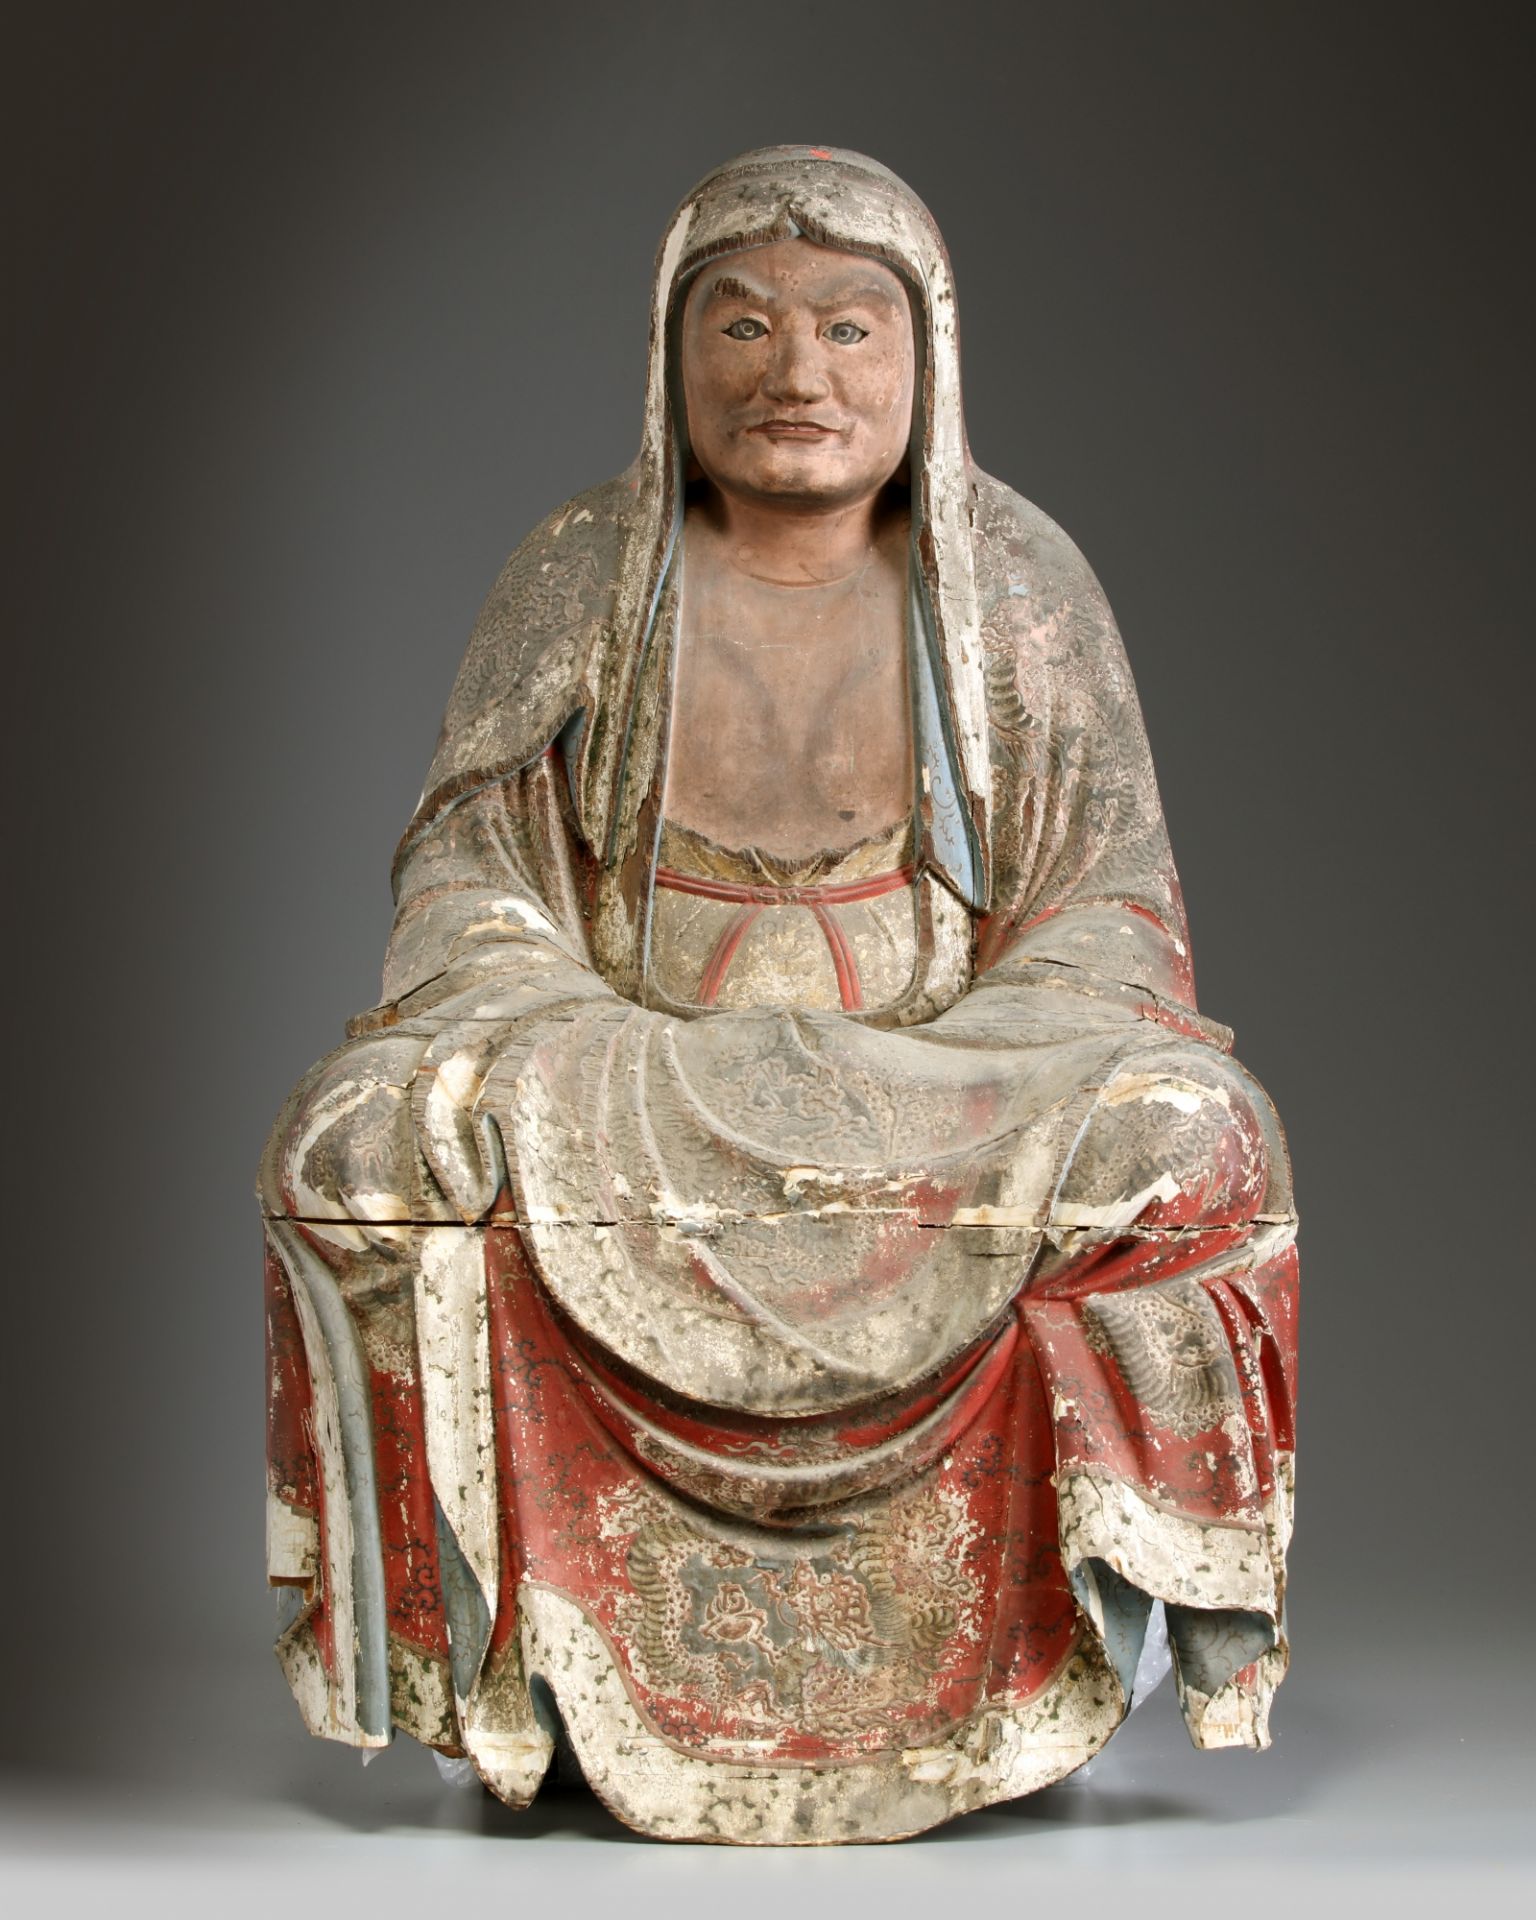 A Japanese wooden figure of Daruma